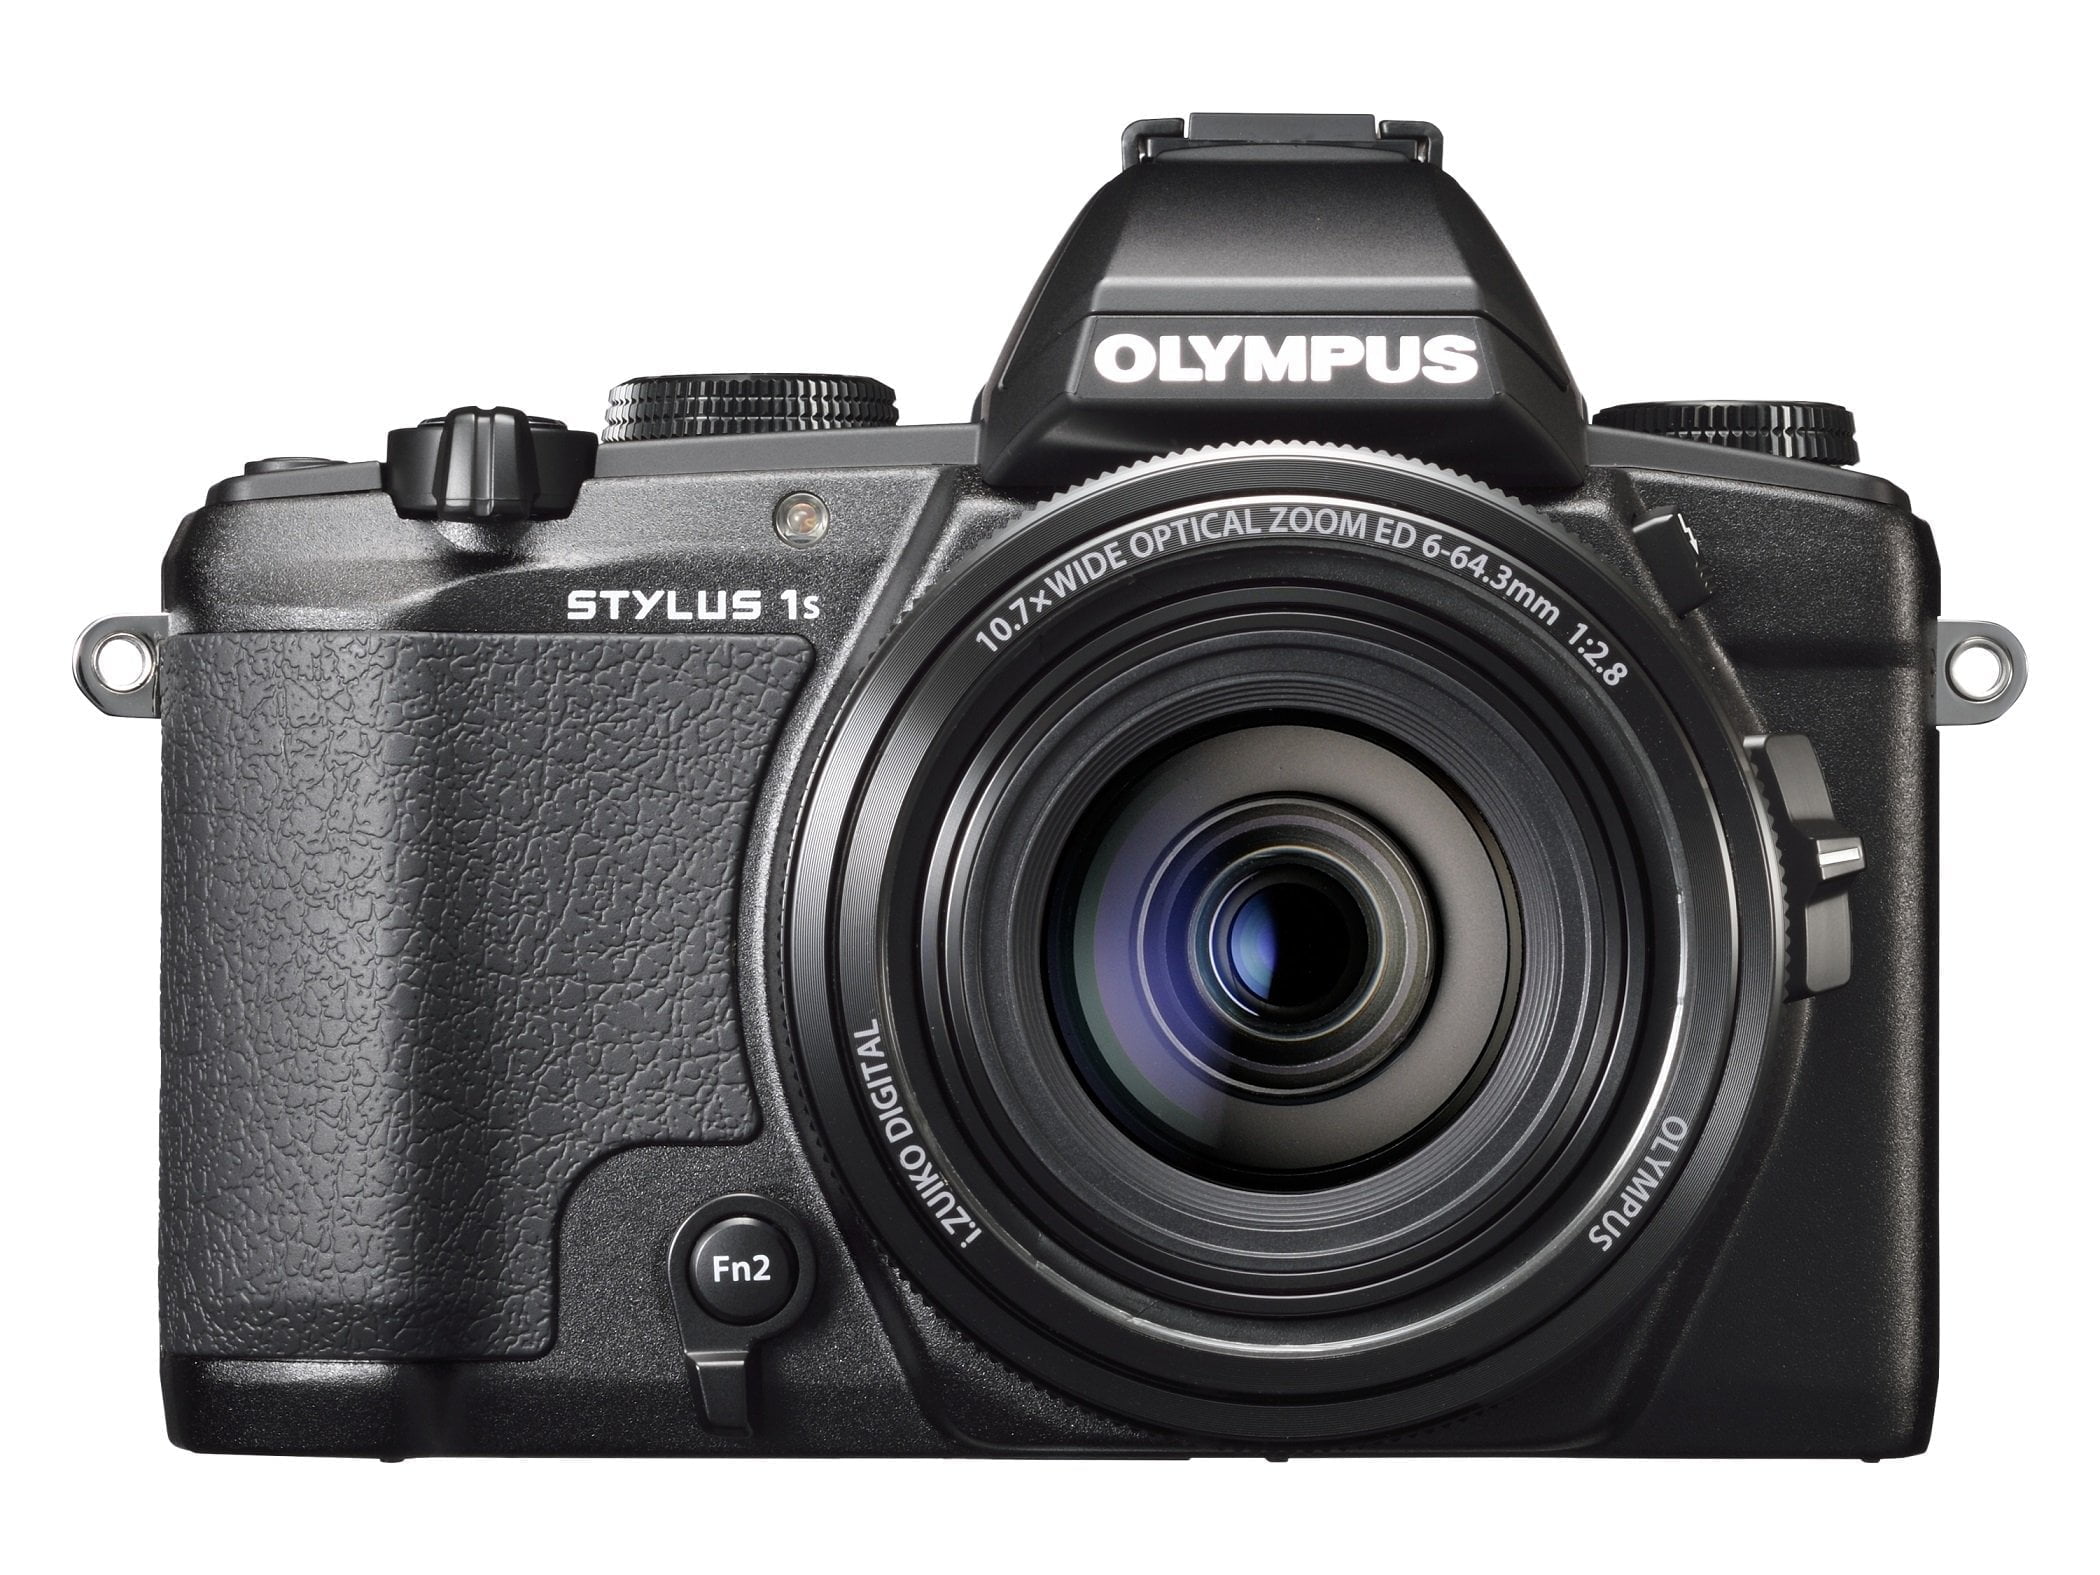 Olympus introduceert nieuwe STYLUS camera's 1